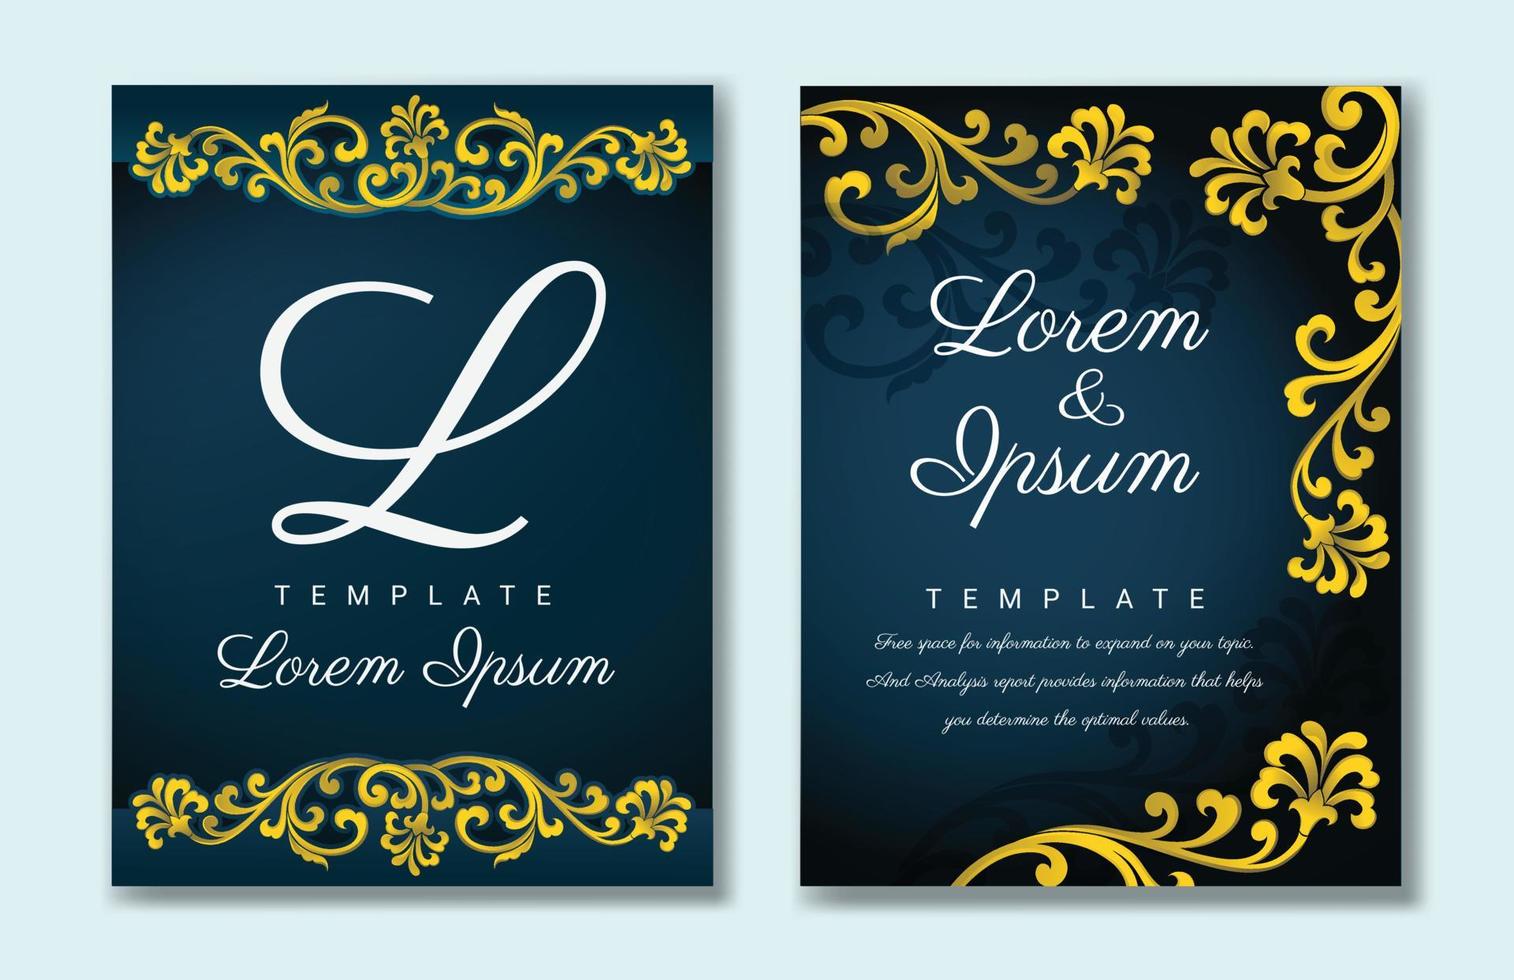 Luxury wedding invitation design or card templates vector